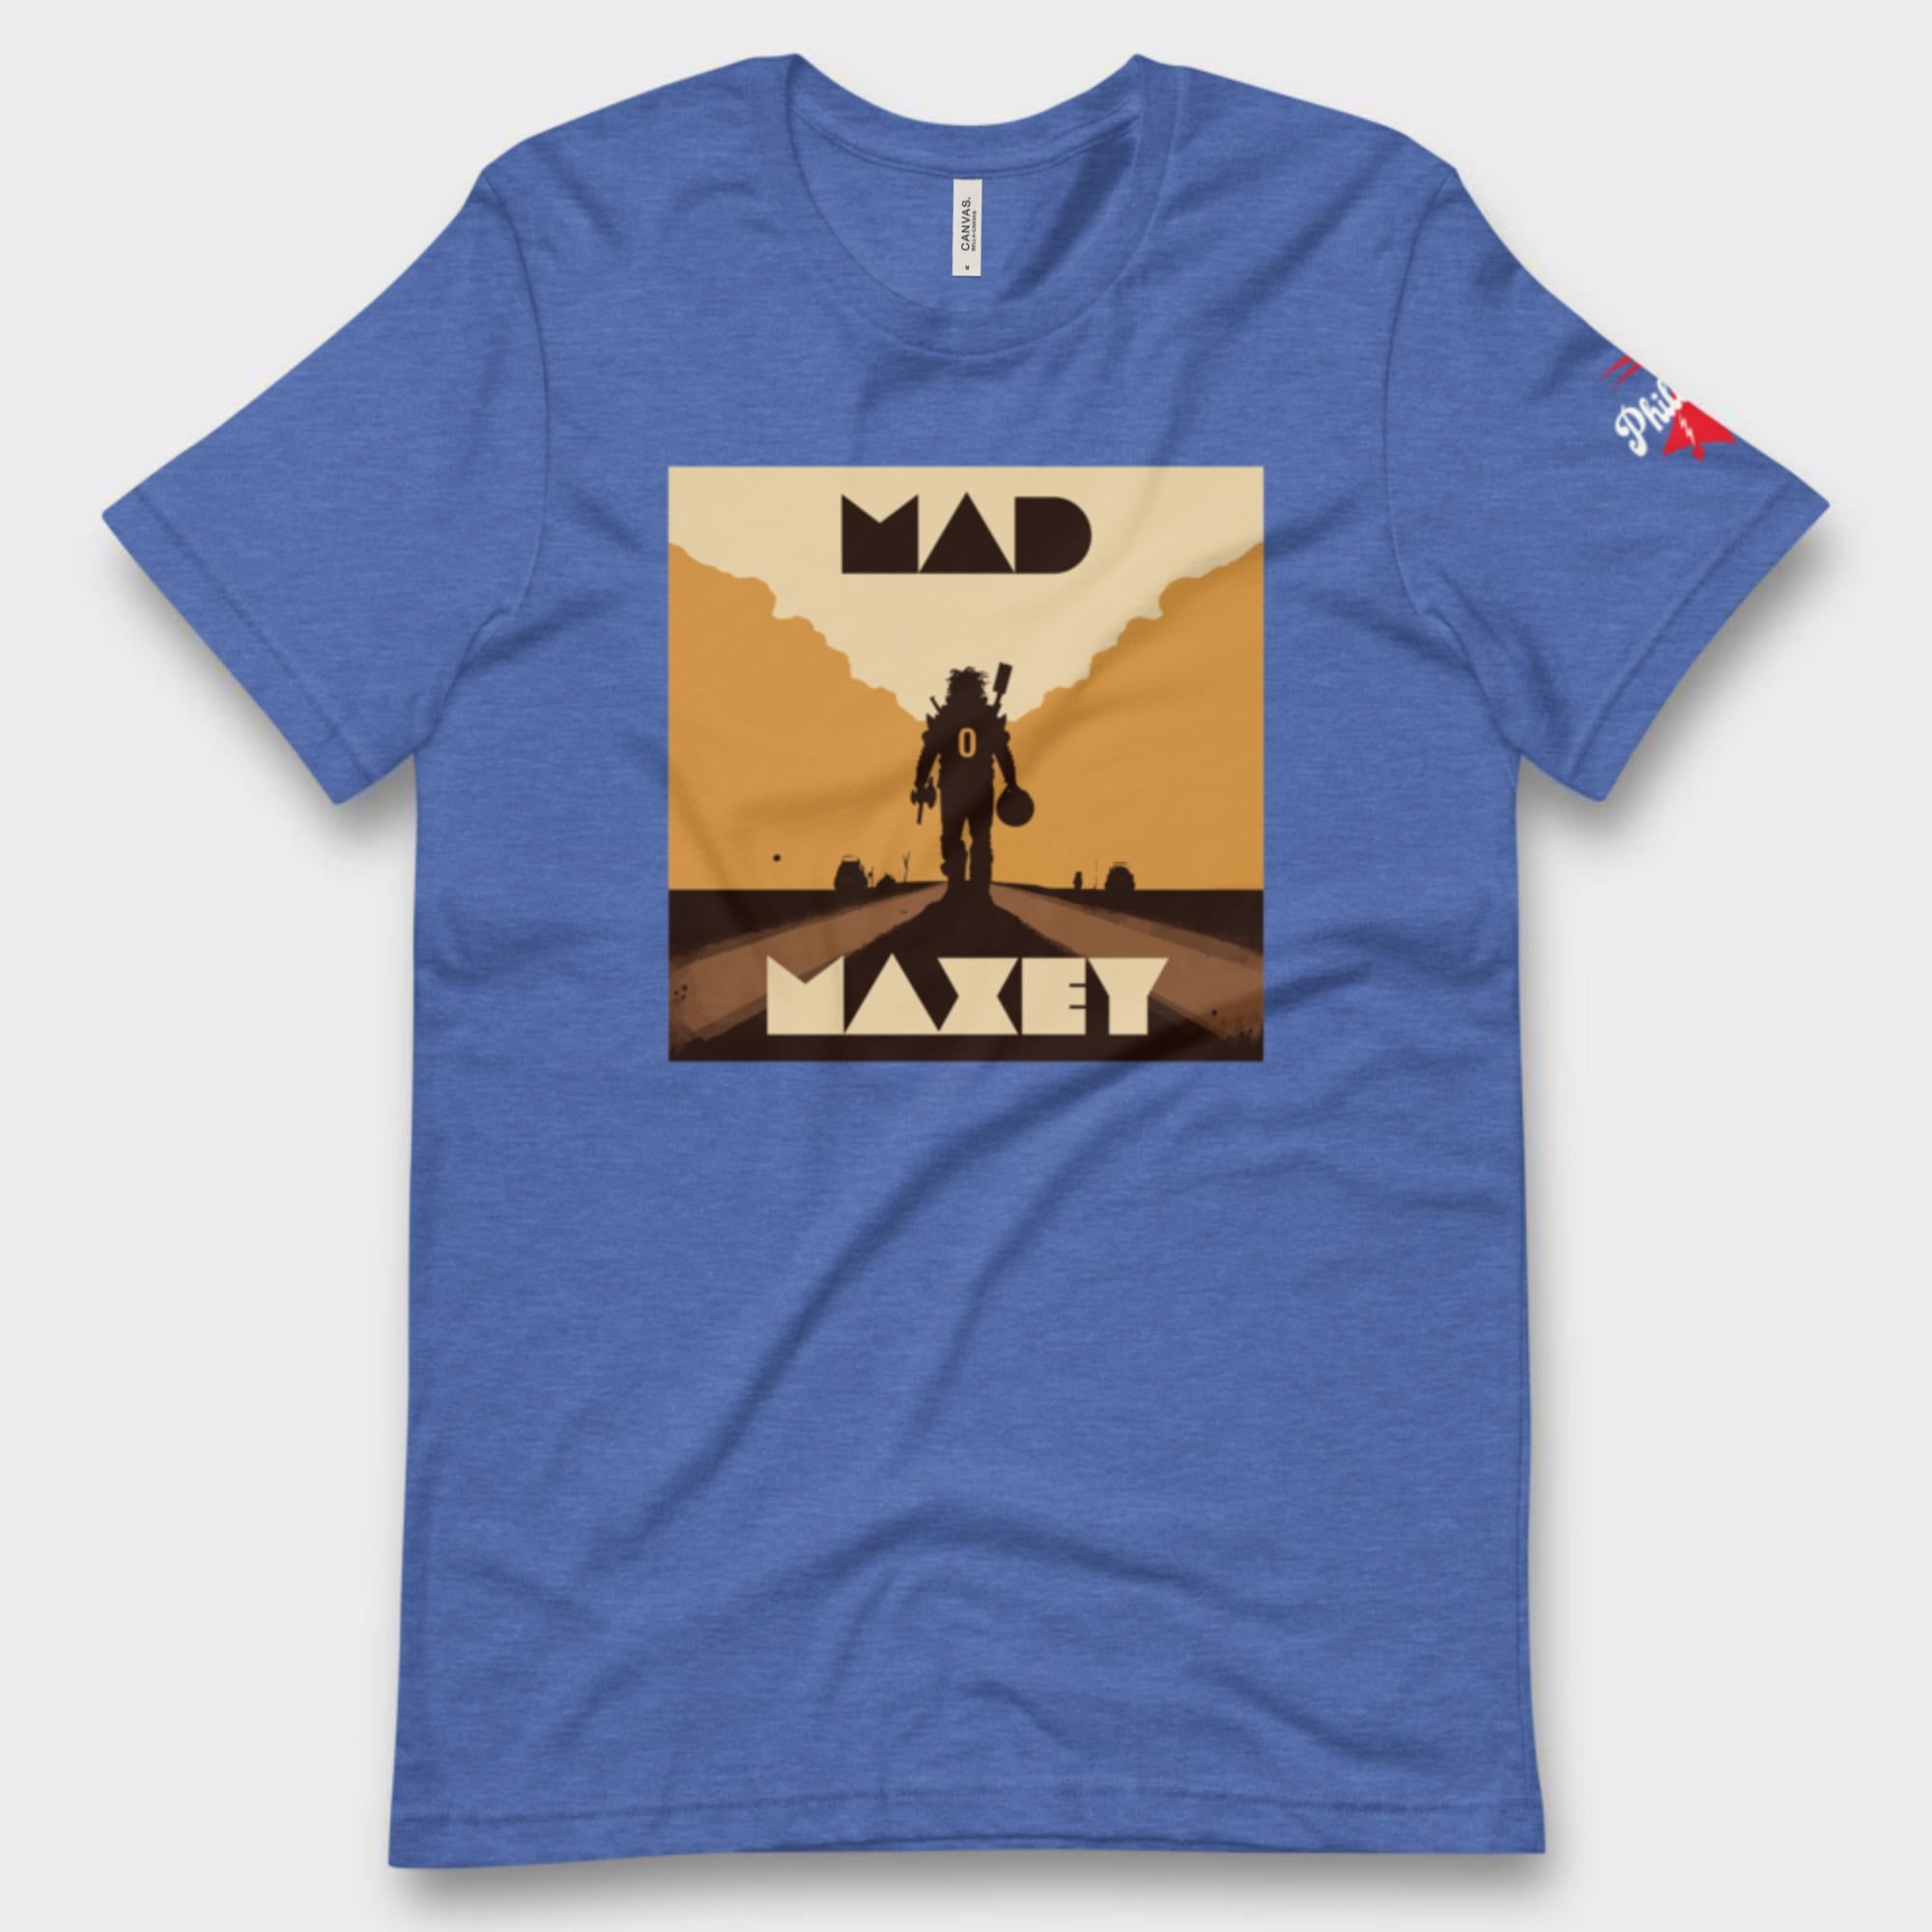 "Mad Maxey" Tee